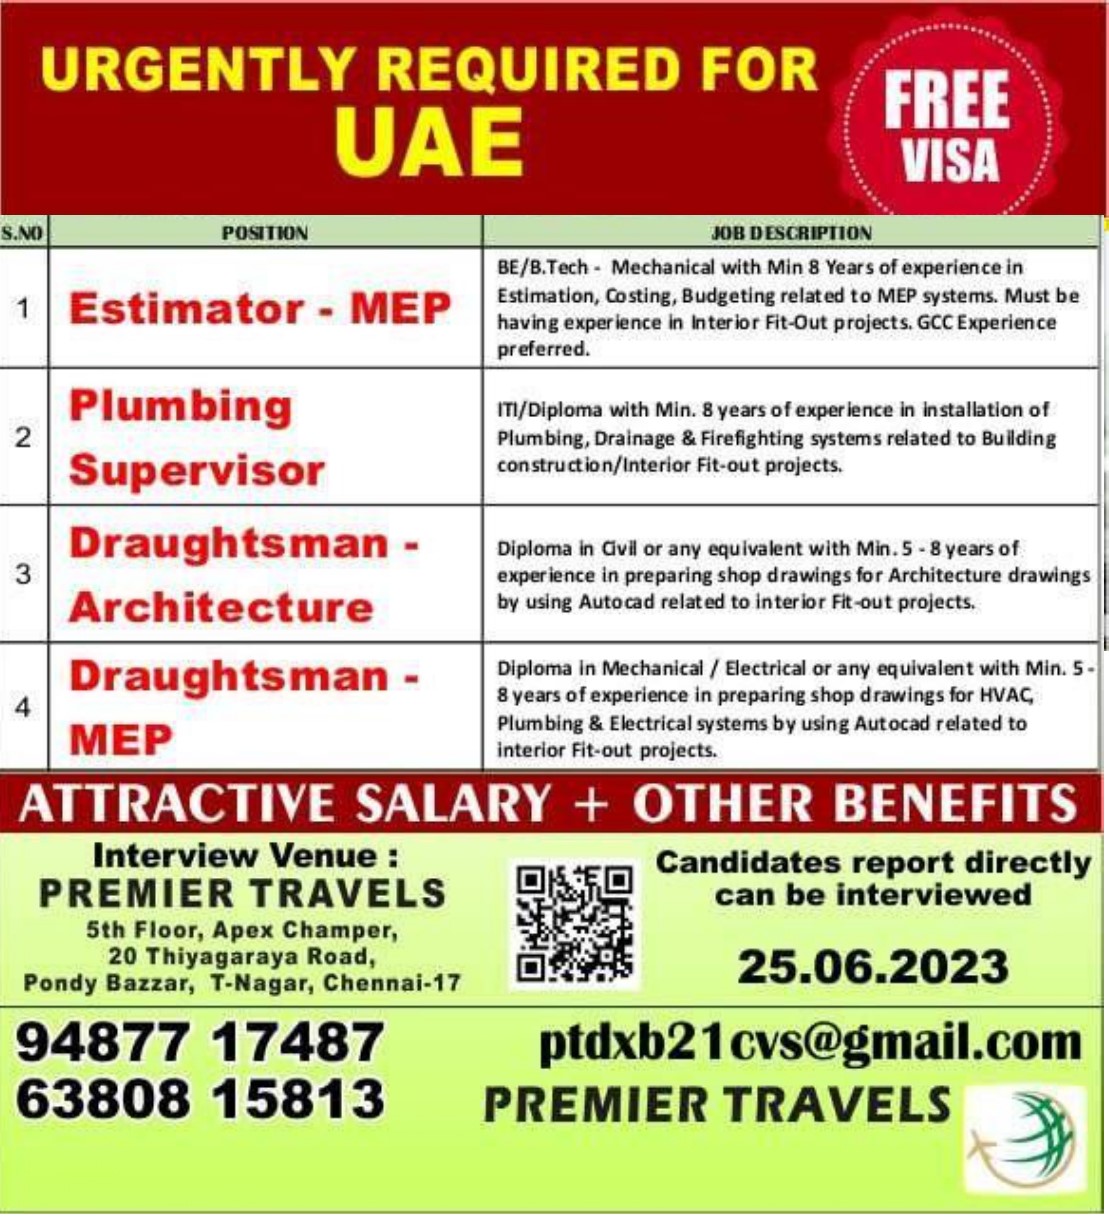 Free Visa for Dubai